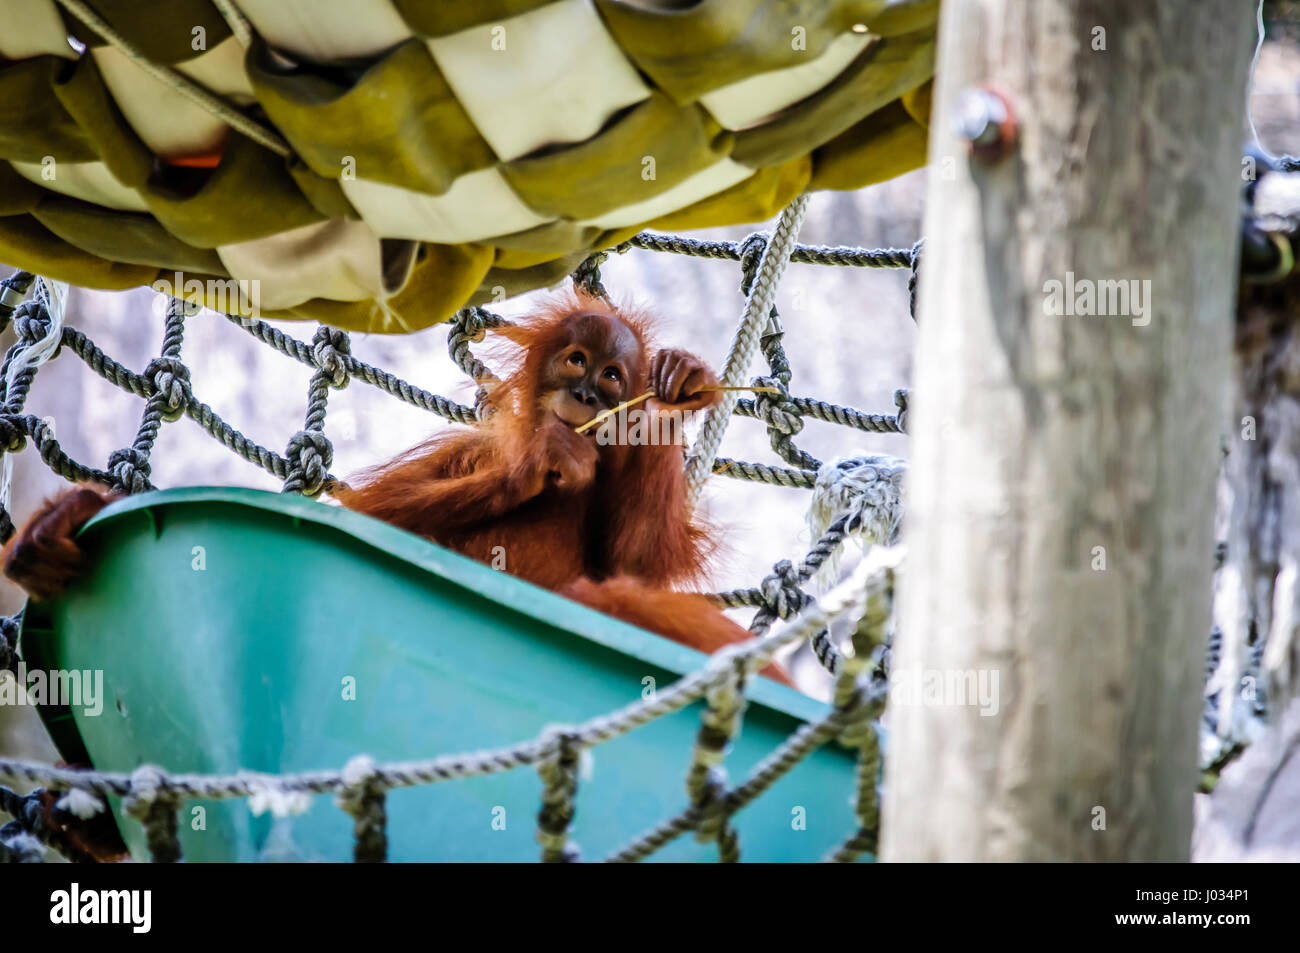 Cute baby orangutan in captivity in a zoo Stock Photo